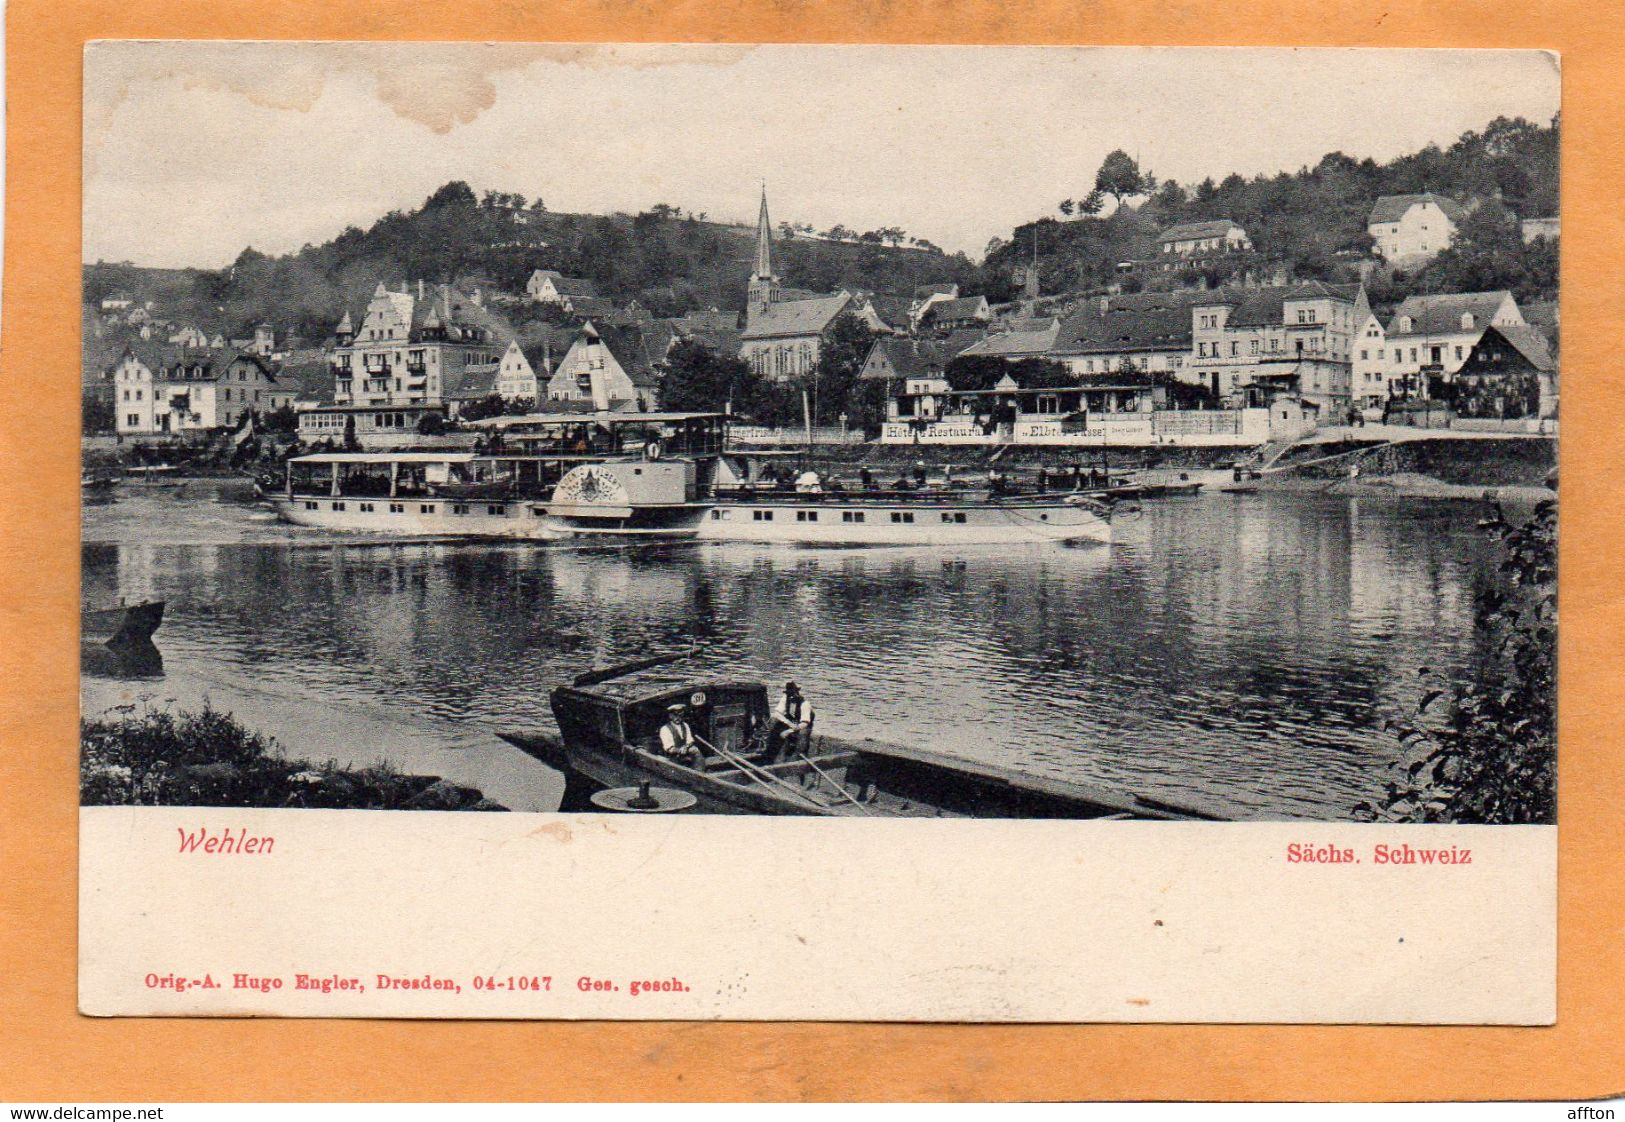 Wehlen Germany 1900 Postcard - Wehlen